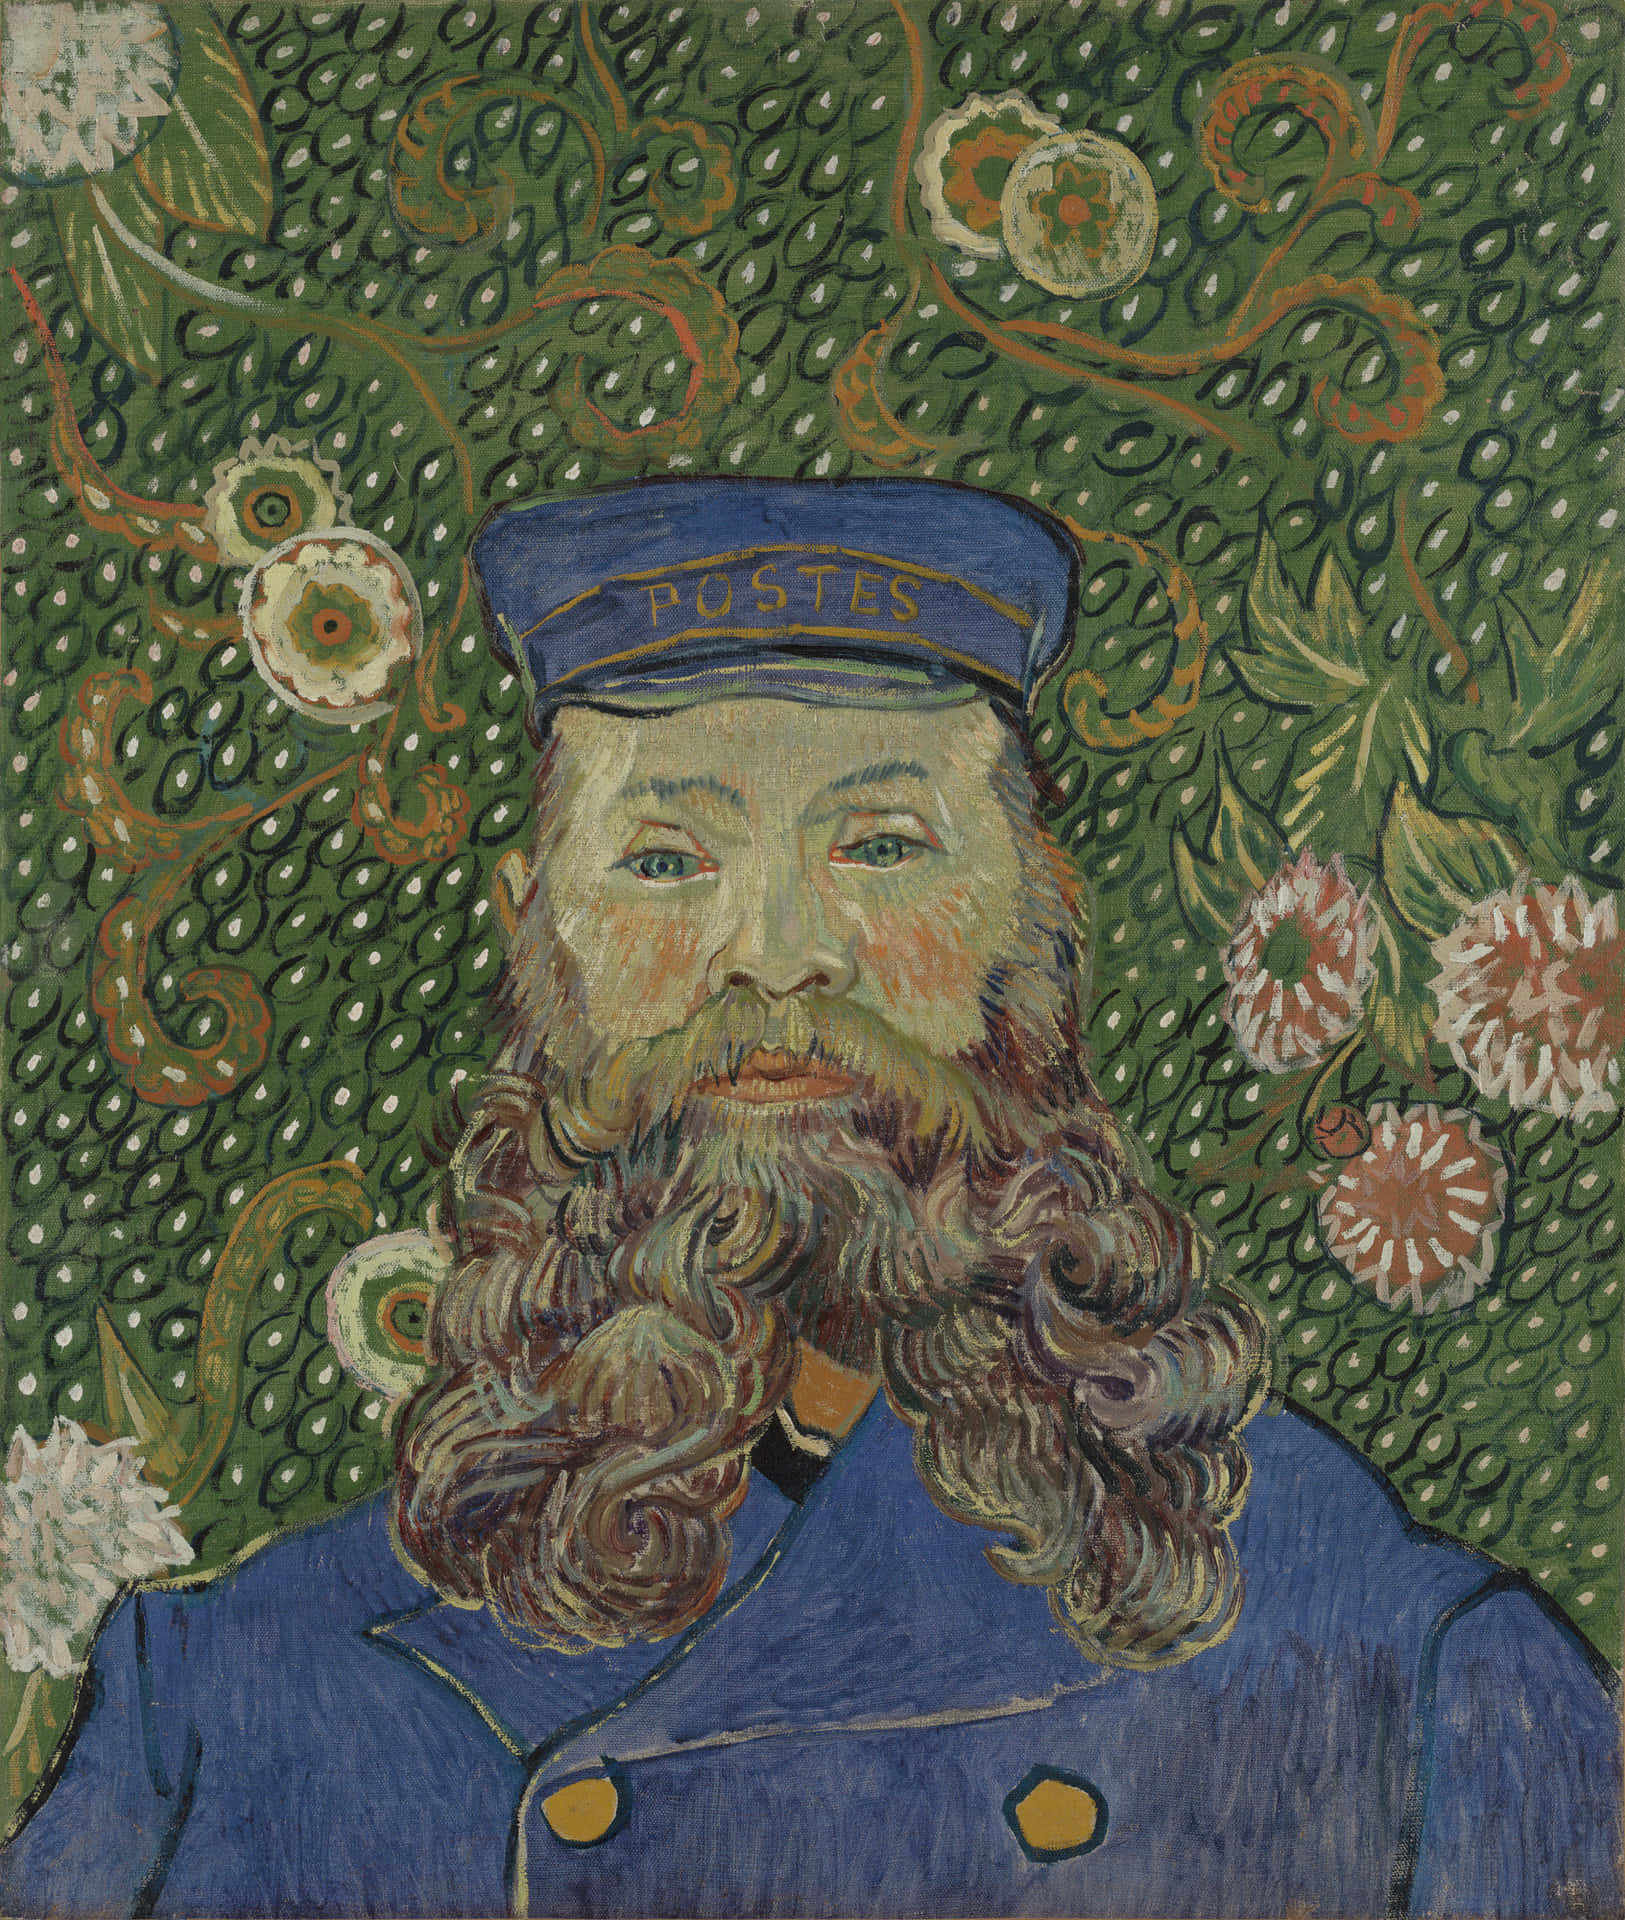 A recreation of Van Gogh's Starry Night.